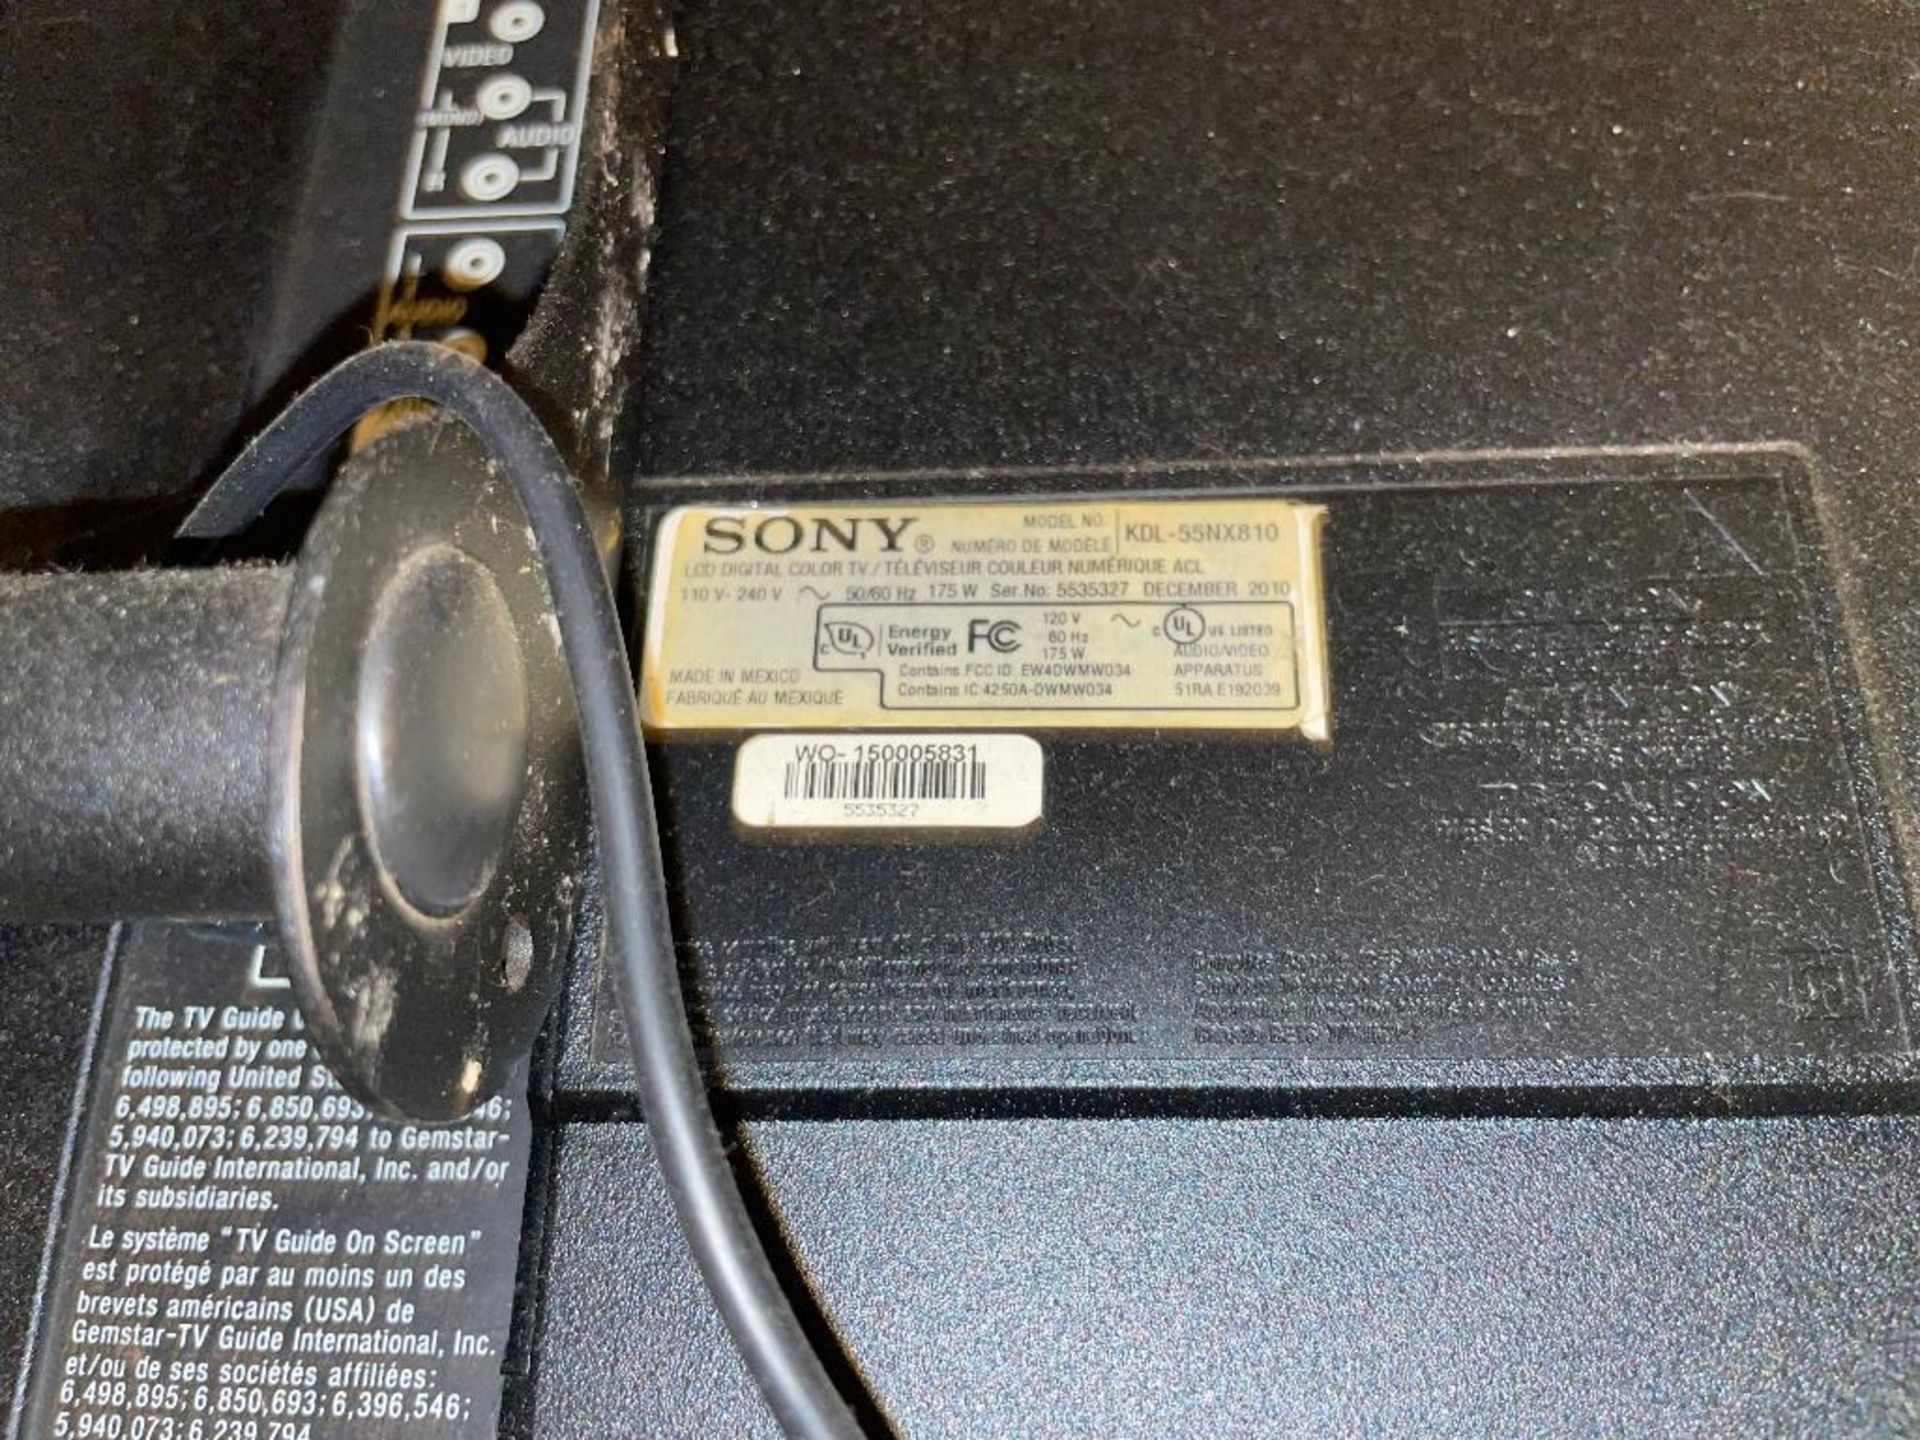 DESCRIPTION: SONY 55" LCD TV W/ WALL MOUNTED BRACKET BRAND / MODEL: SONY KDL-55NX810 SIZE 55" LOCATI - Image 2 of 2